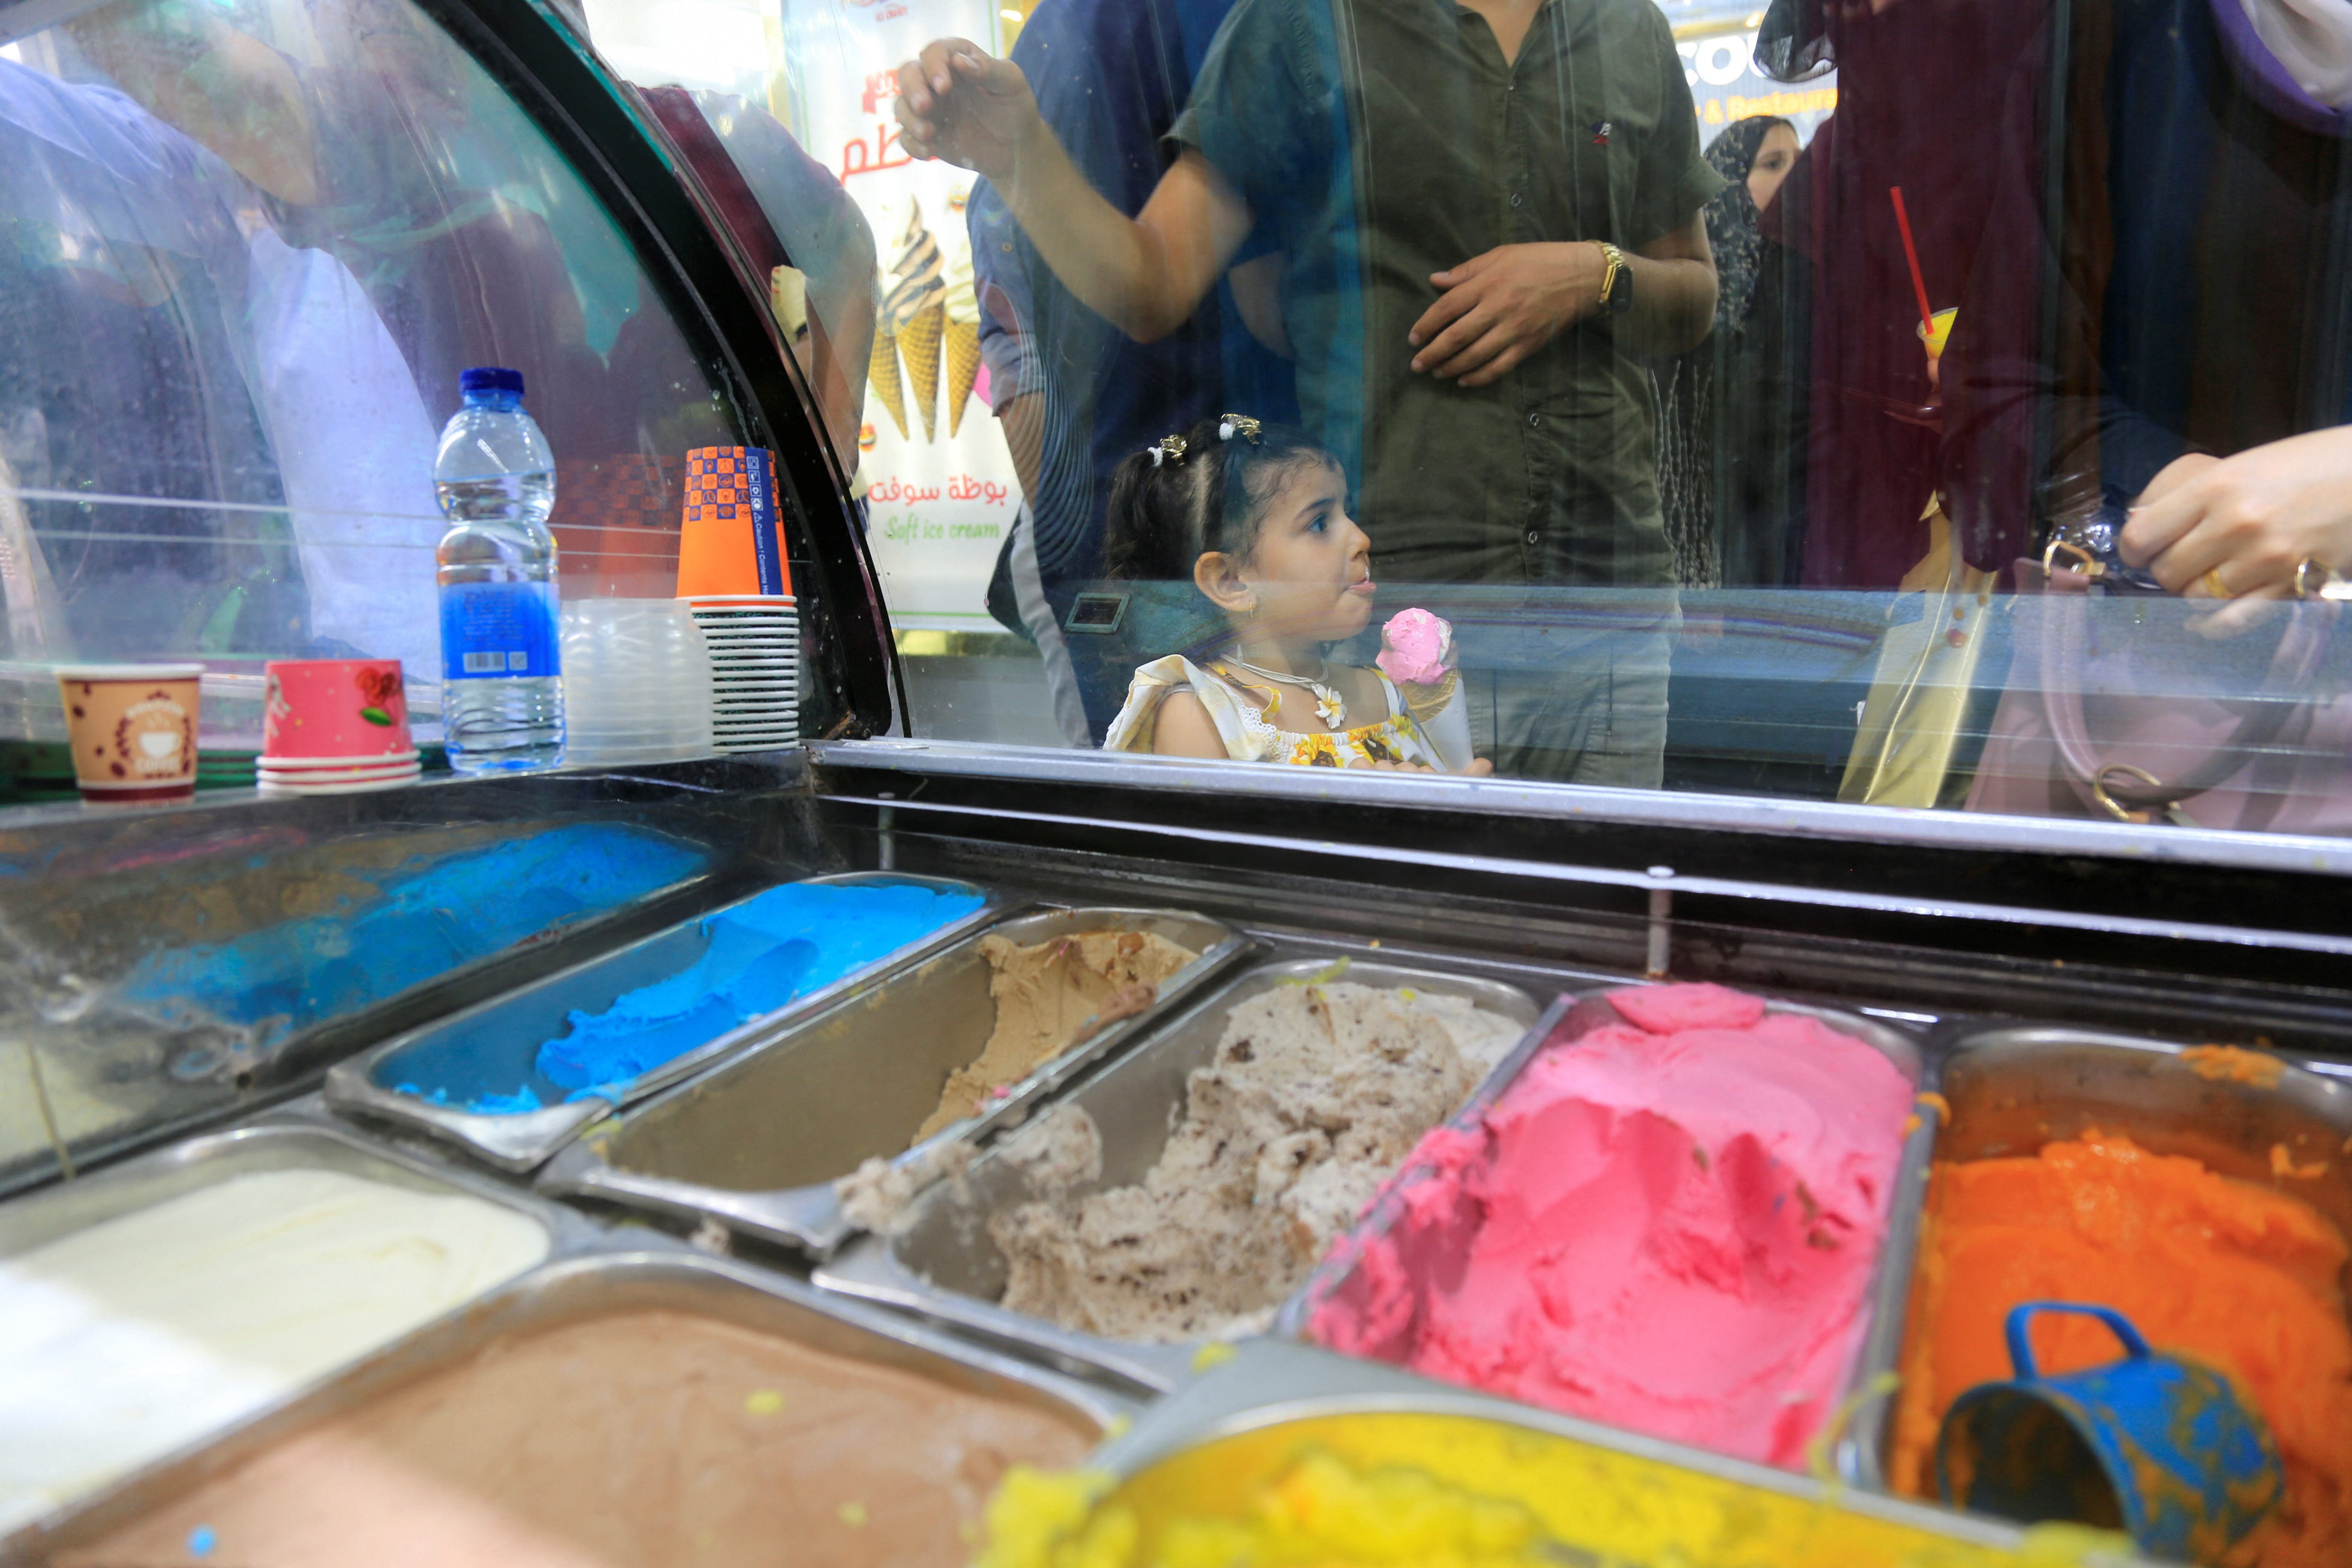 Heat and lengthy power cuts melt ice cream shops' profits in Gaza